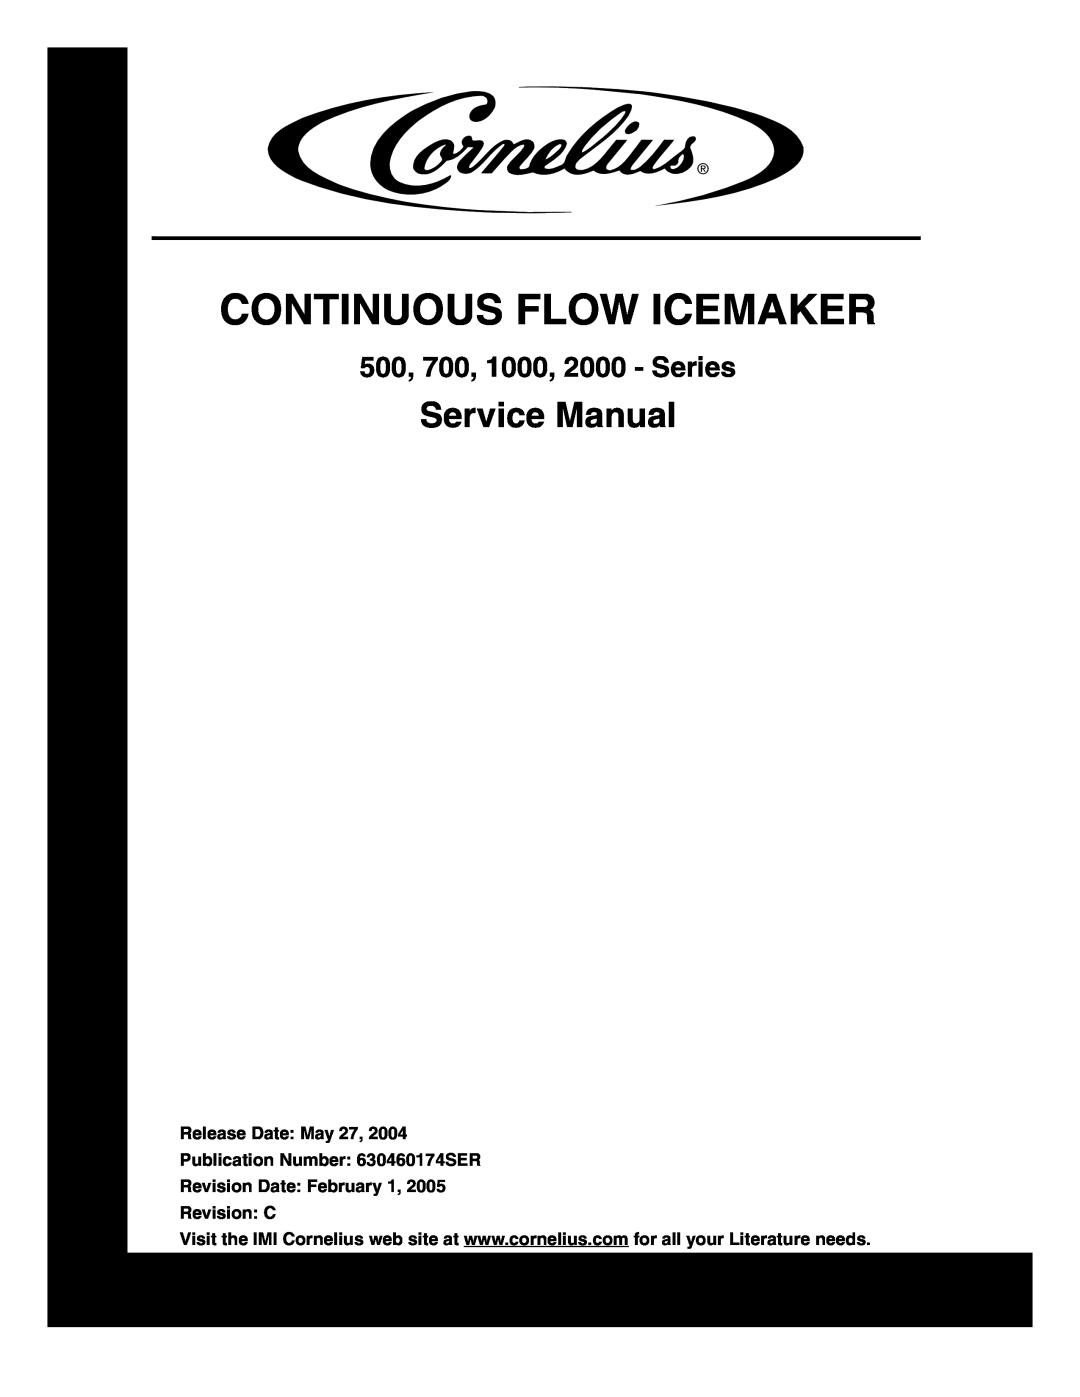 Cornelius 700 - Series service manual Service Manual, Continuous Flow Icemaker, 500, 700, 1000, 2000 - Series 